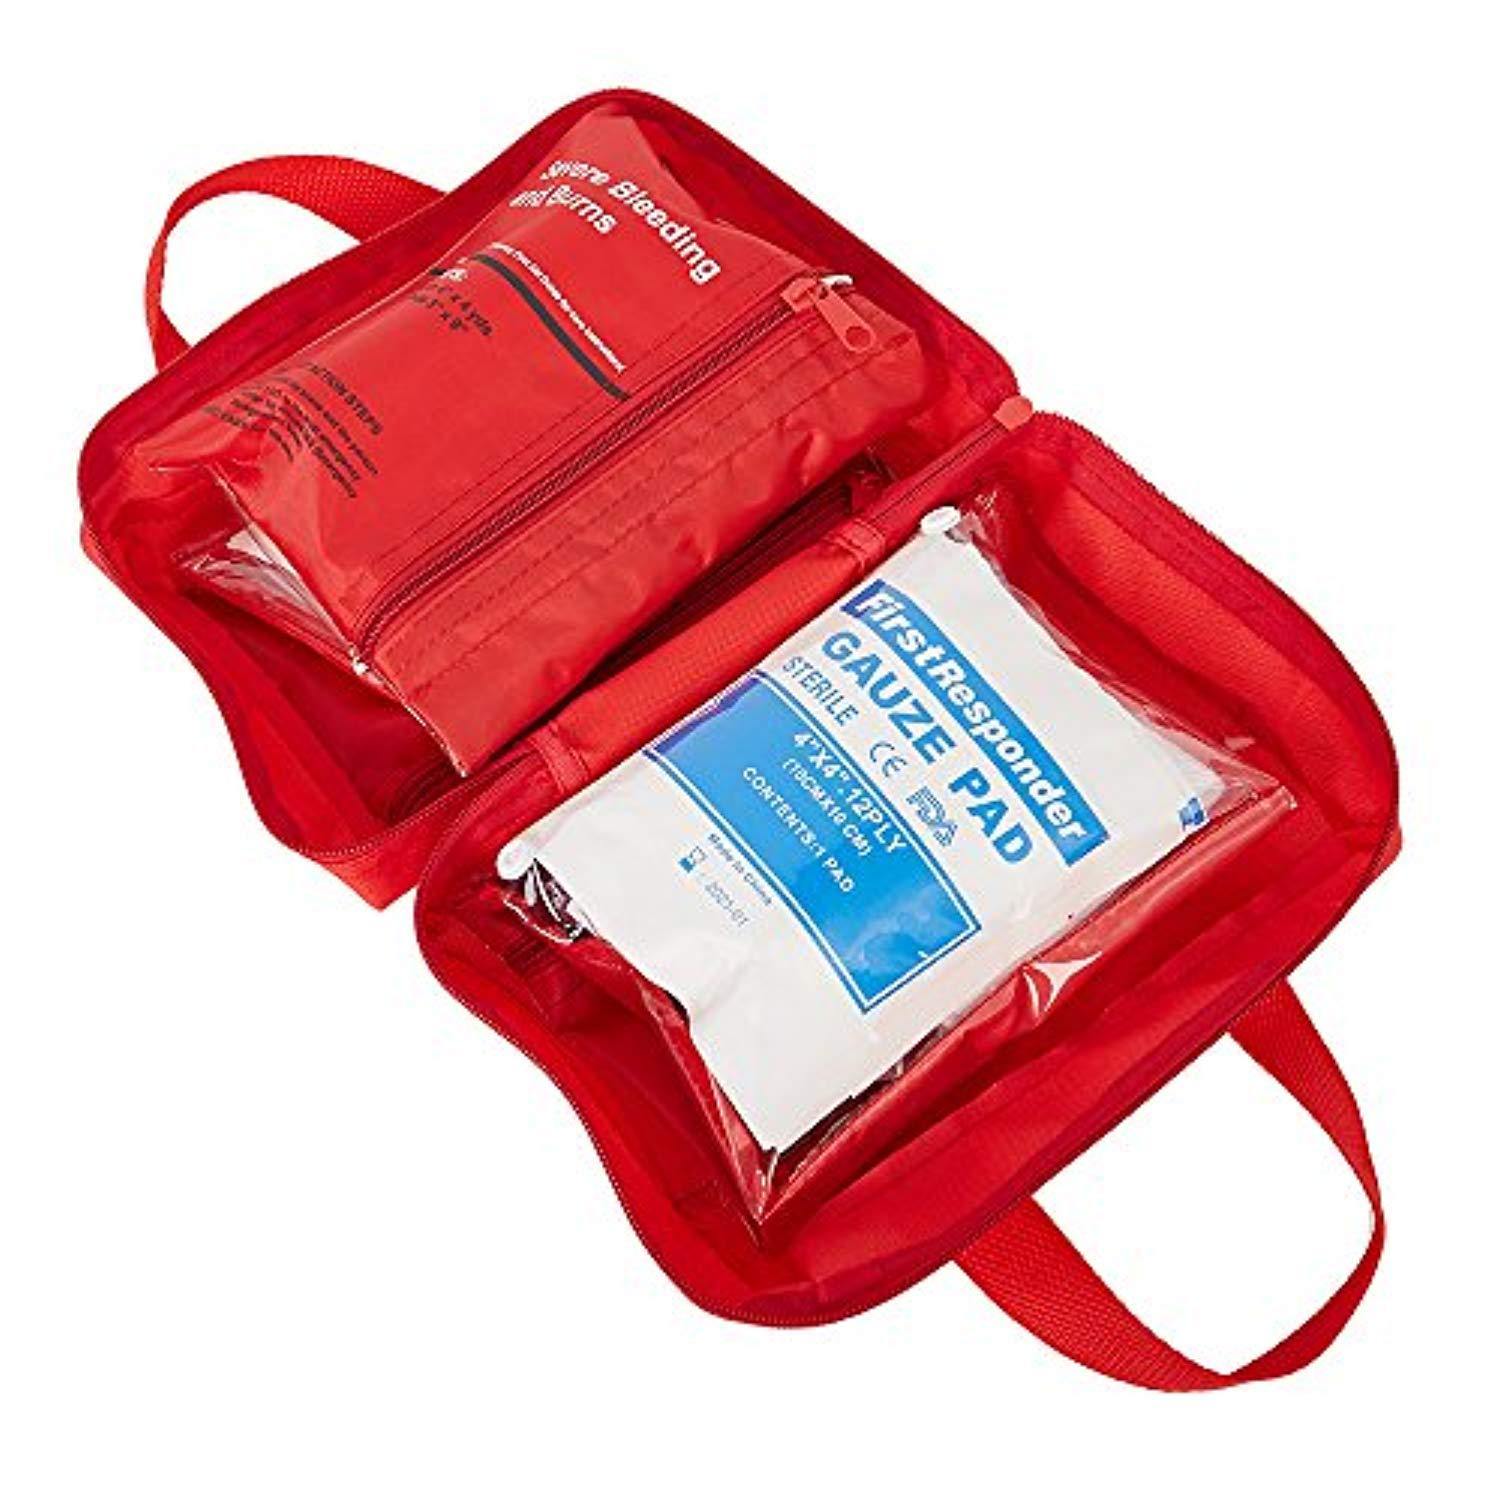 Bosonshop First Aid Kit & Red Cross Medical Emergency Equipment Kits